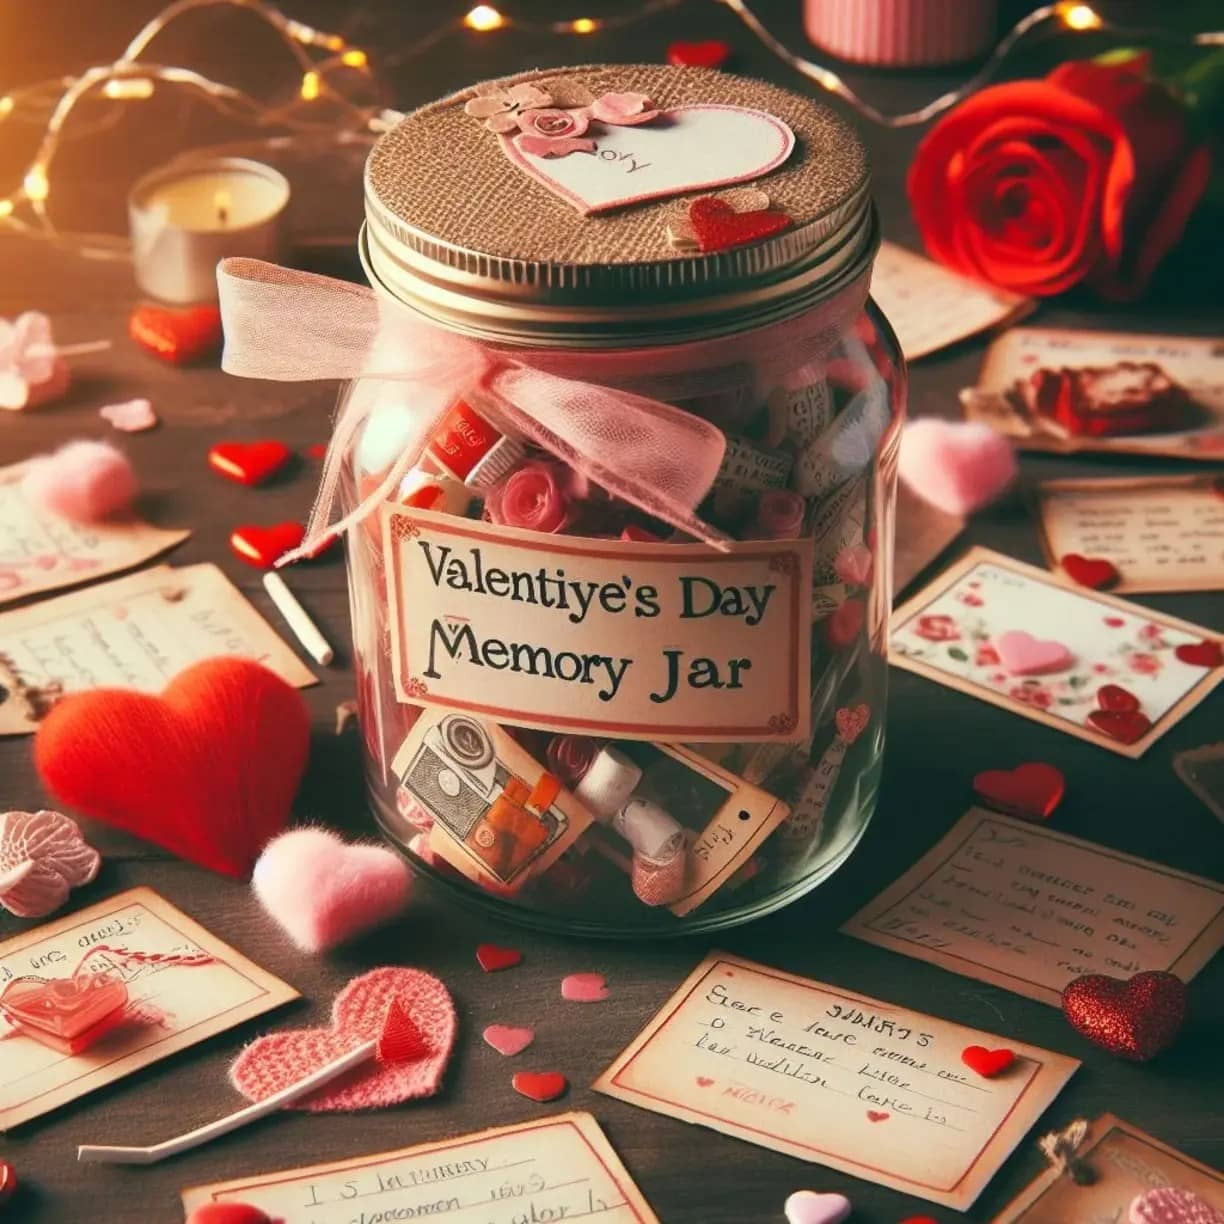 Valentine’s Day Memory Jar Ideas: Cherishing Moments in a Jar